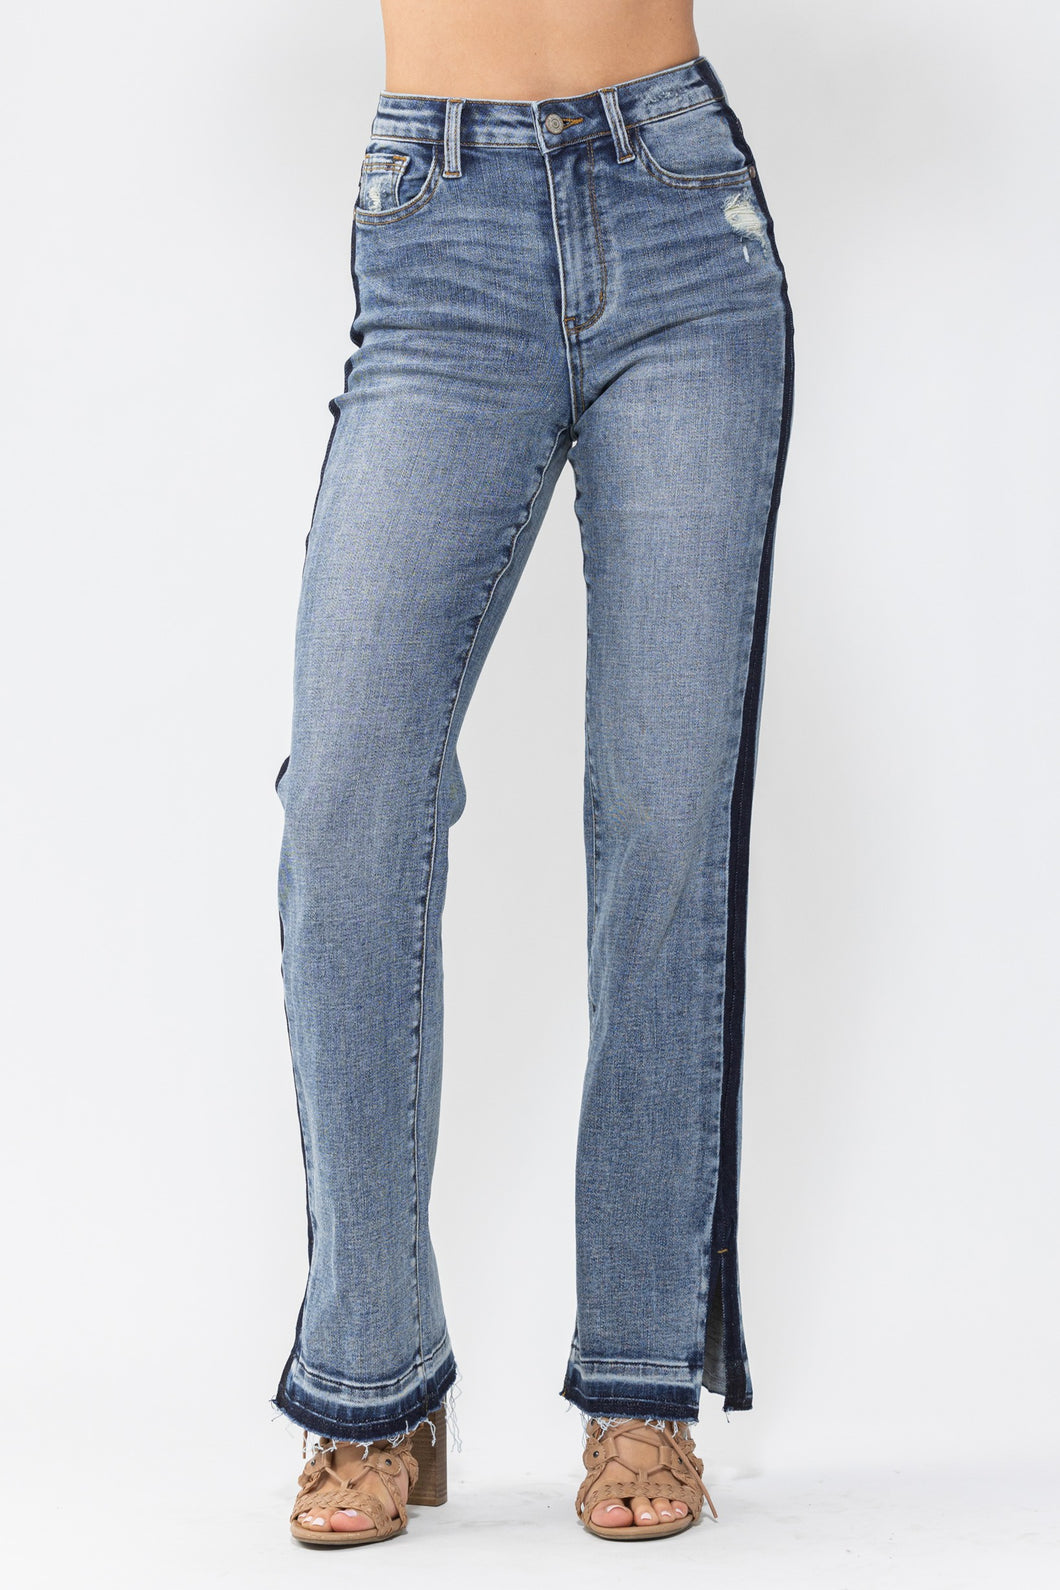 Medium High Waist Side Seam Detail Straight Judy Blue Jeans 10/24/23 7254